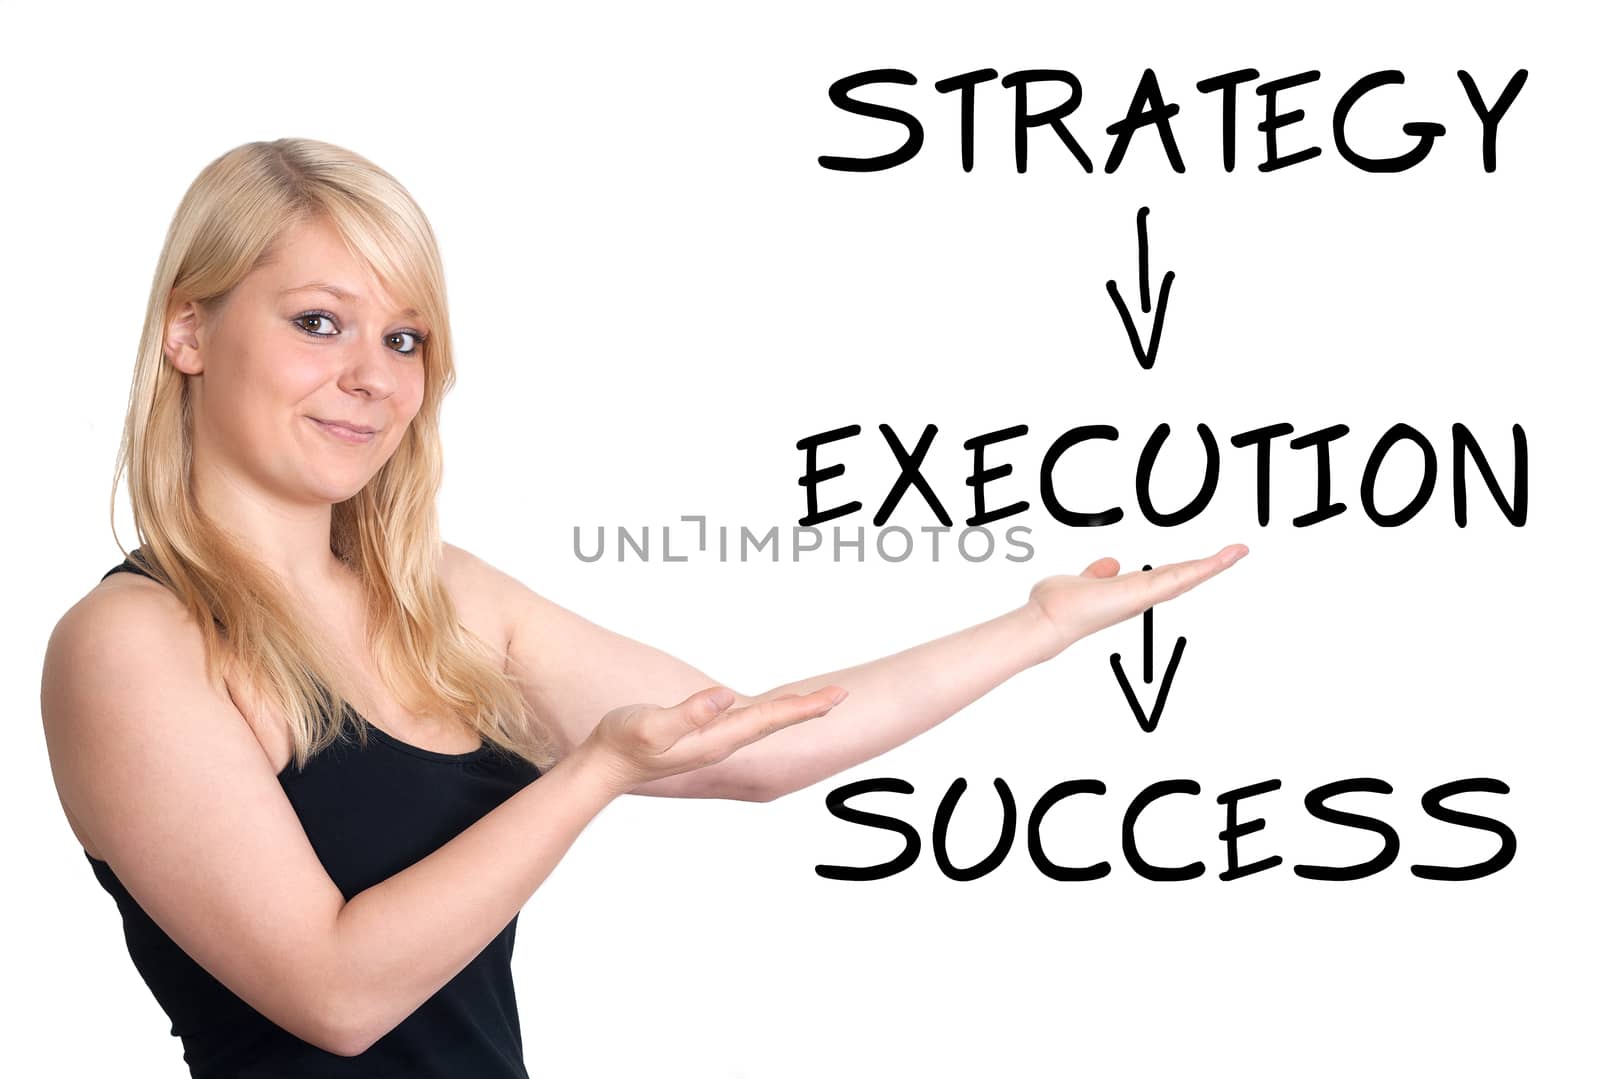 Success concept: Businesswoman introduce a success concept on a whiteboard